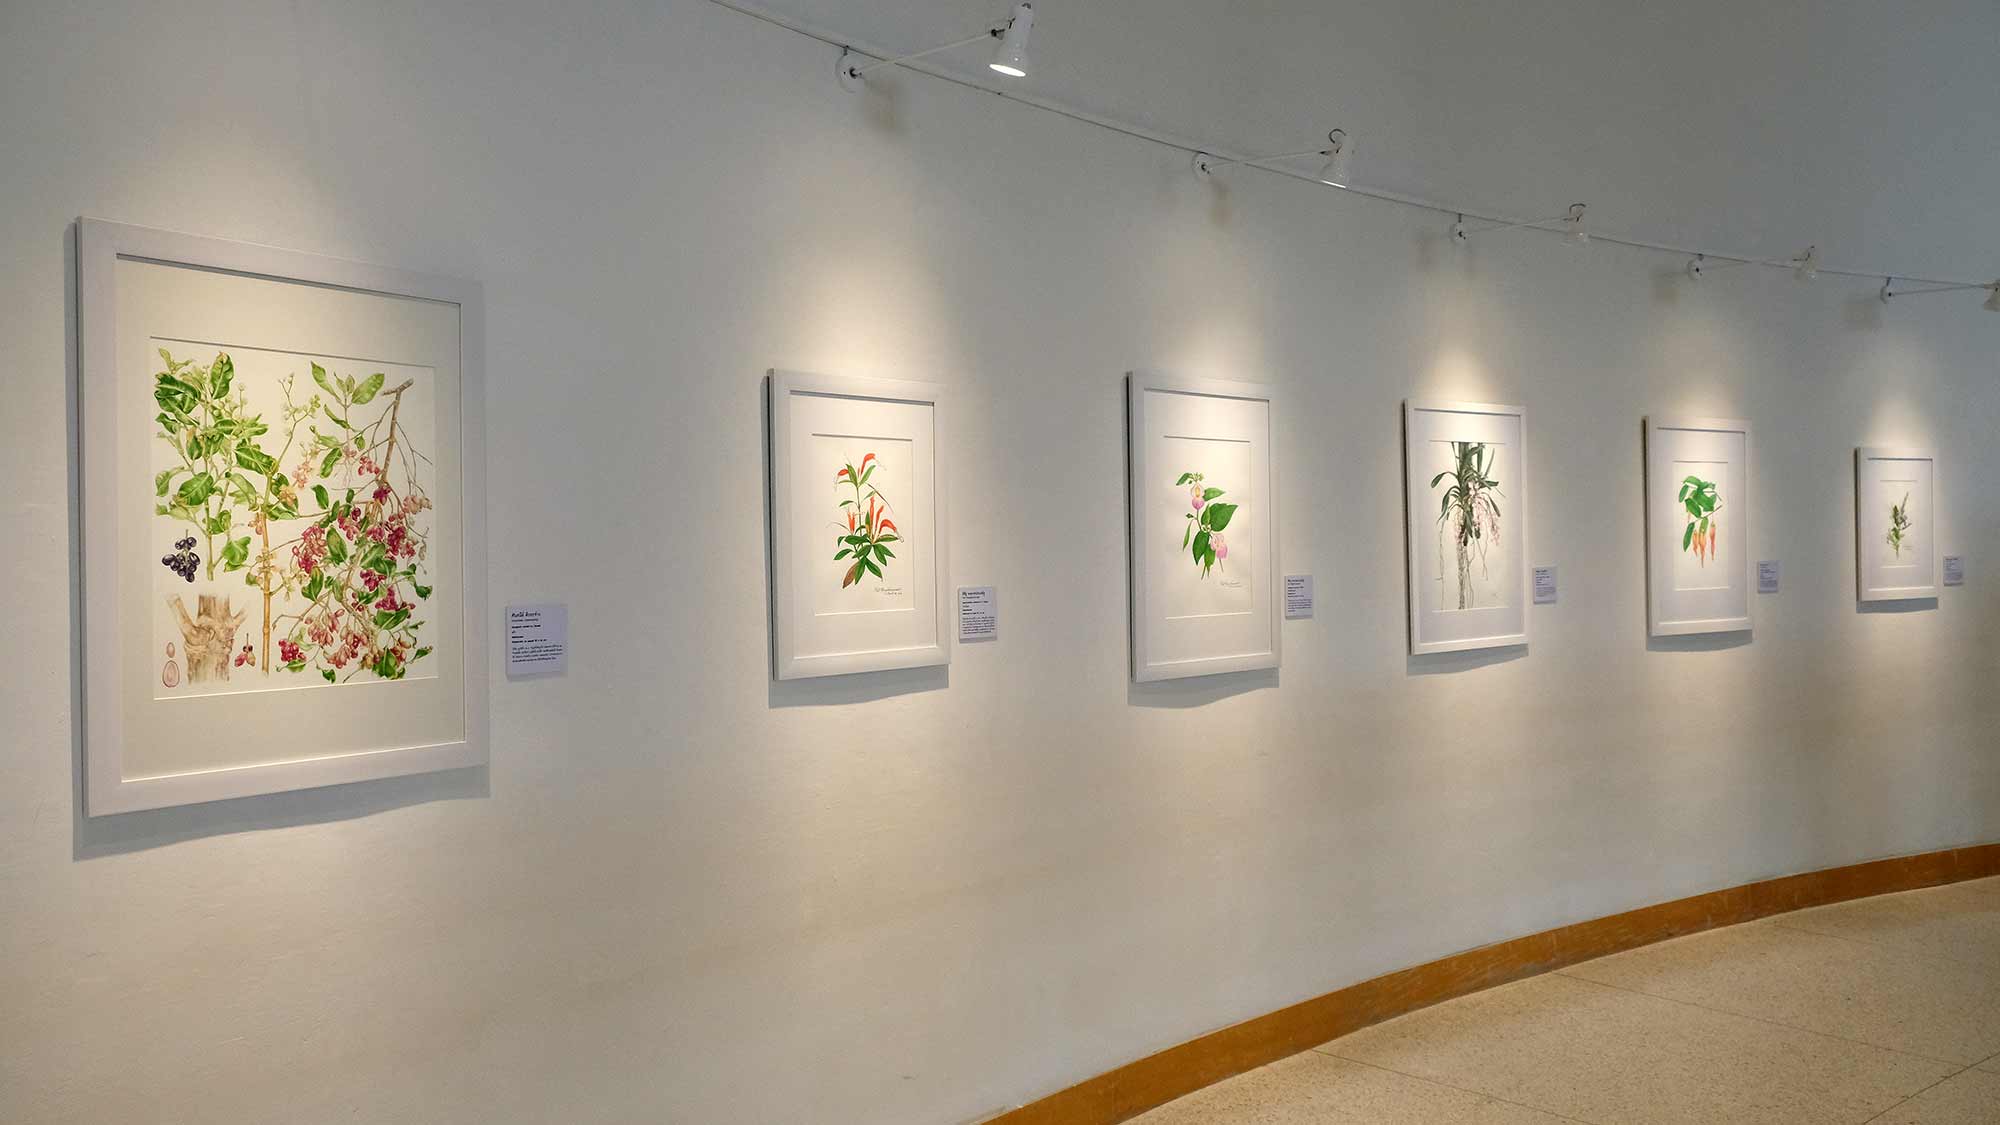 Exhibition Botanical Art Worldwide 2018 – The Beauty of Native Thai Plants | นิทรรศการ ภาพวาด พฤกษศาสตร์ สานพฤกษพรรณผ่านงานพฤกษศิลป์